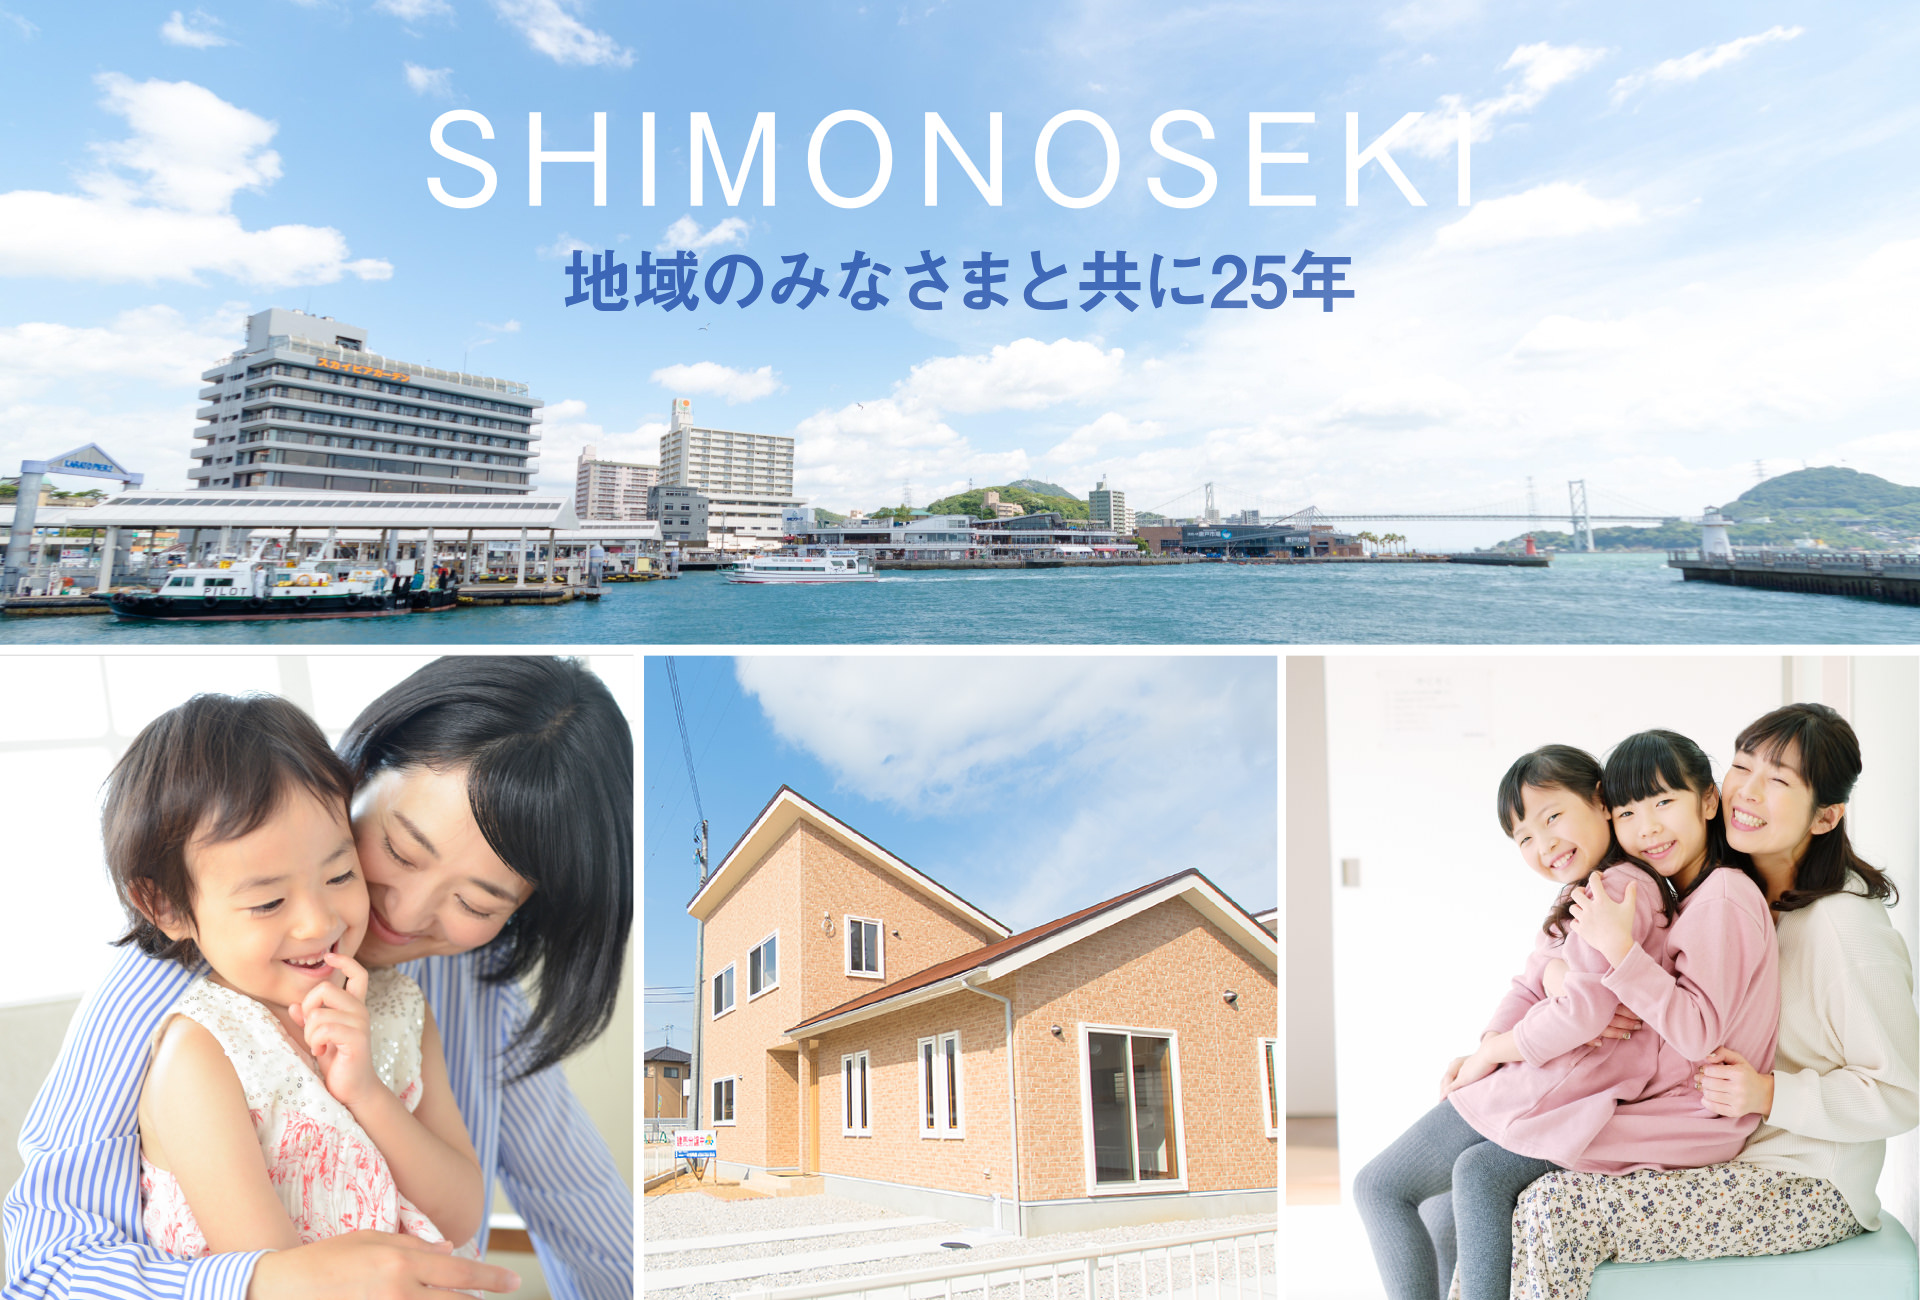 SHIMONOSEKI 地域のみなさまと共に25年